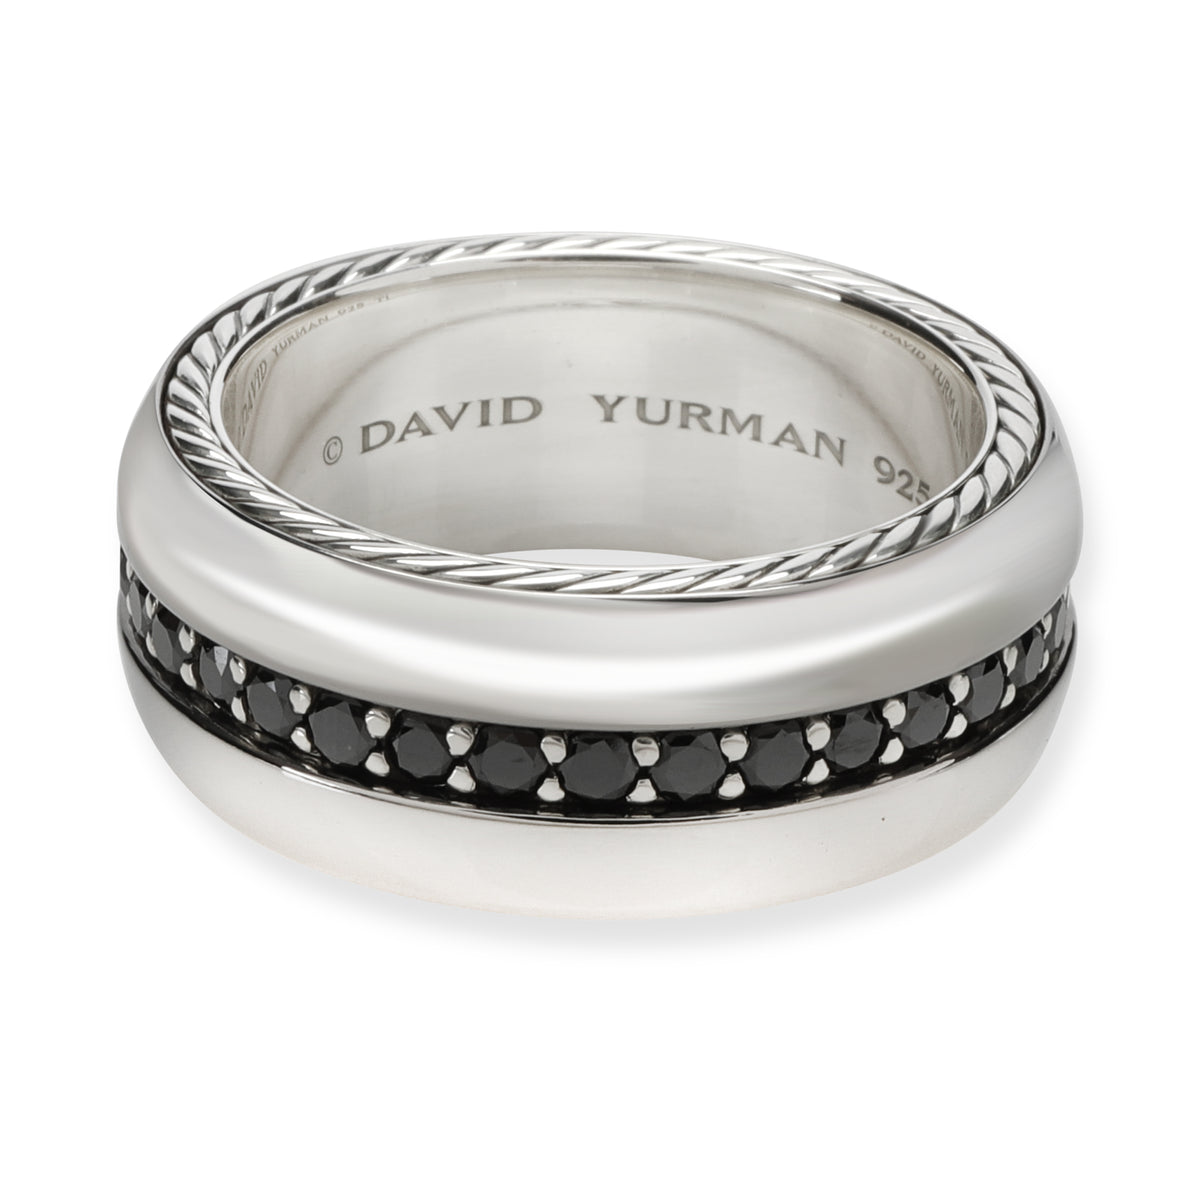 David Yurman Streamline Collection Diamond Men's Ring in Silver and Titanium